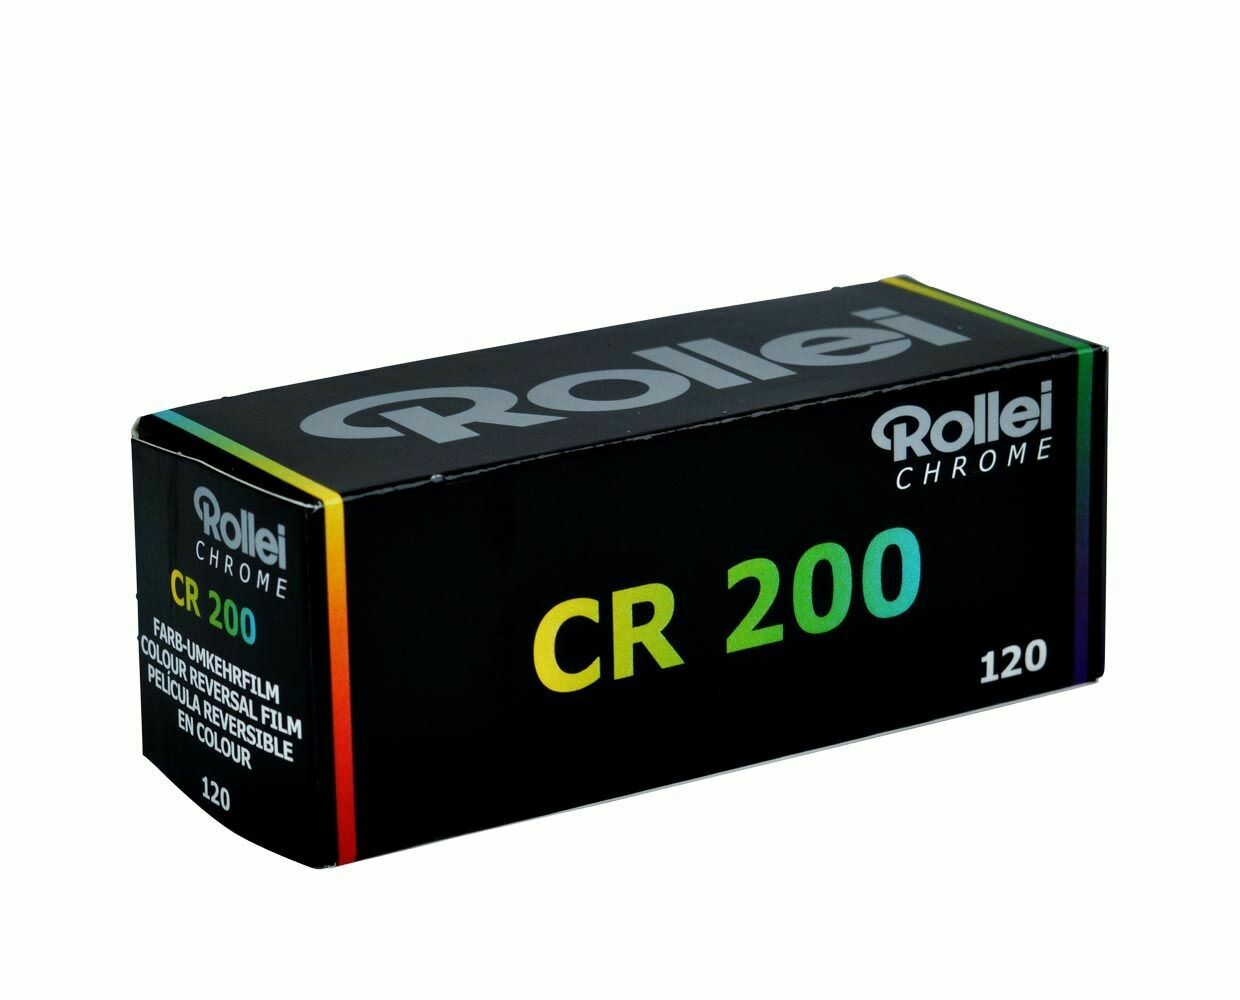 Rollei Chrome CR 200 Rollfilm 120 MHD 01/2021